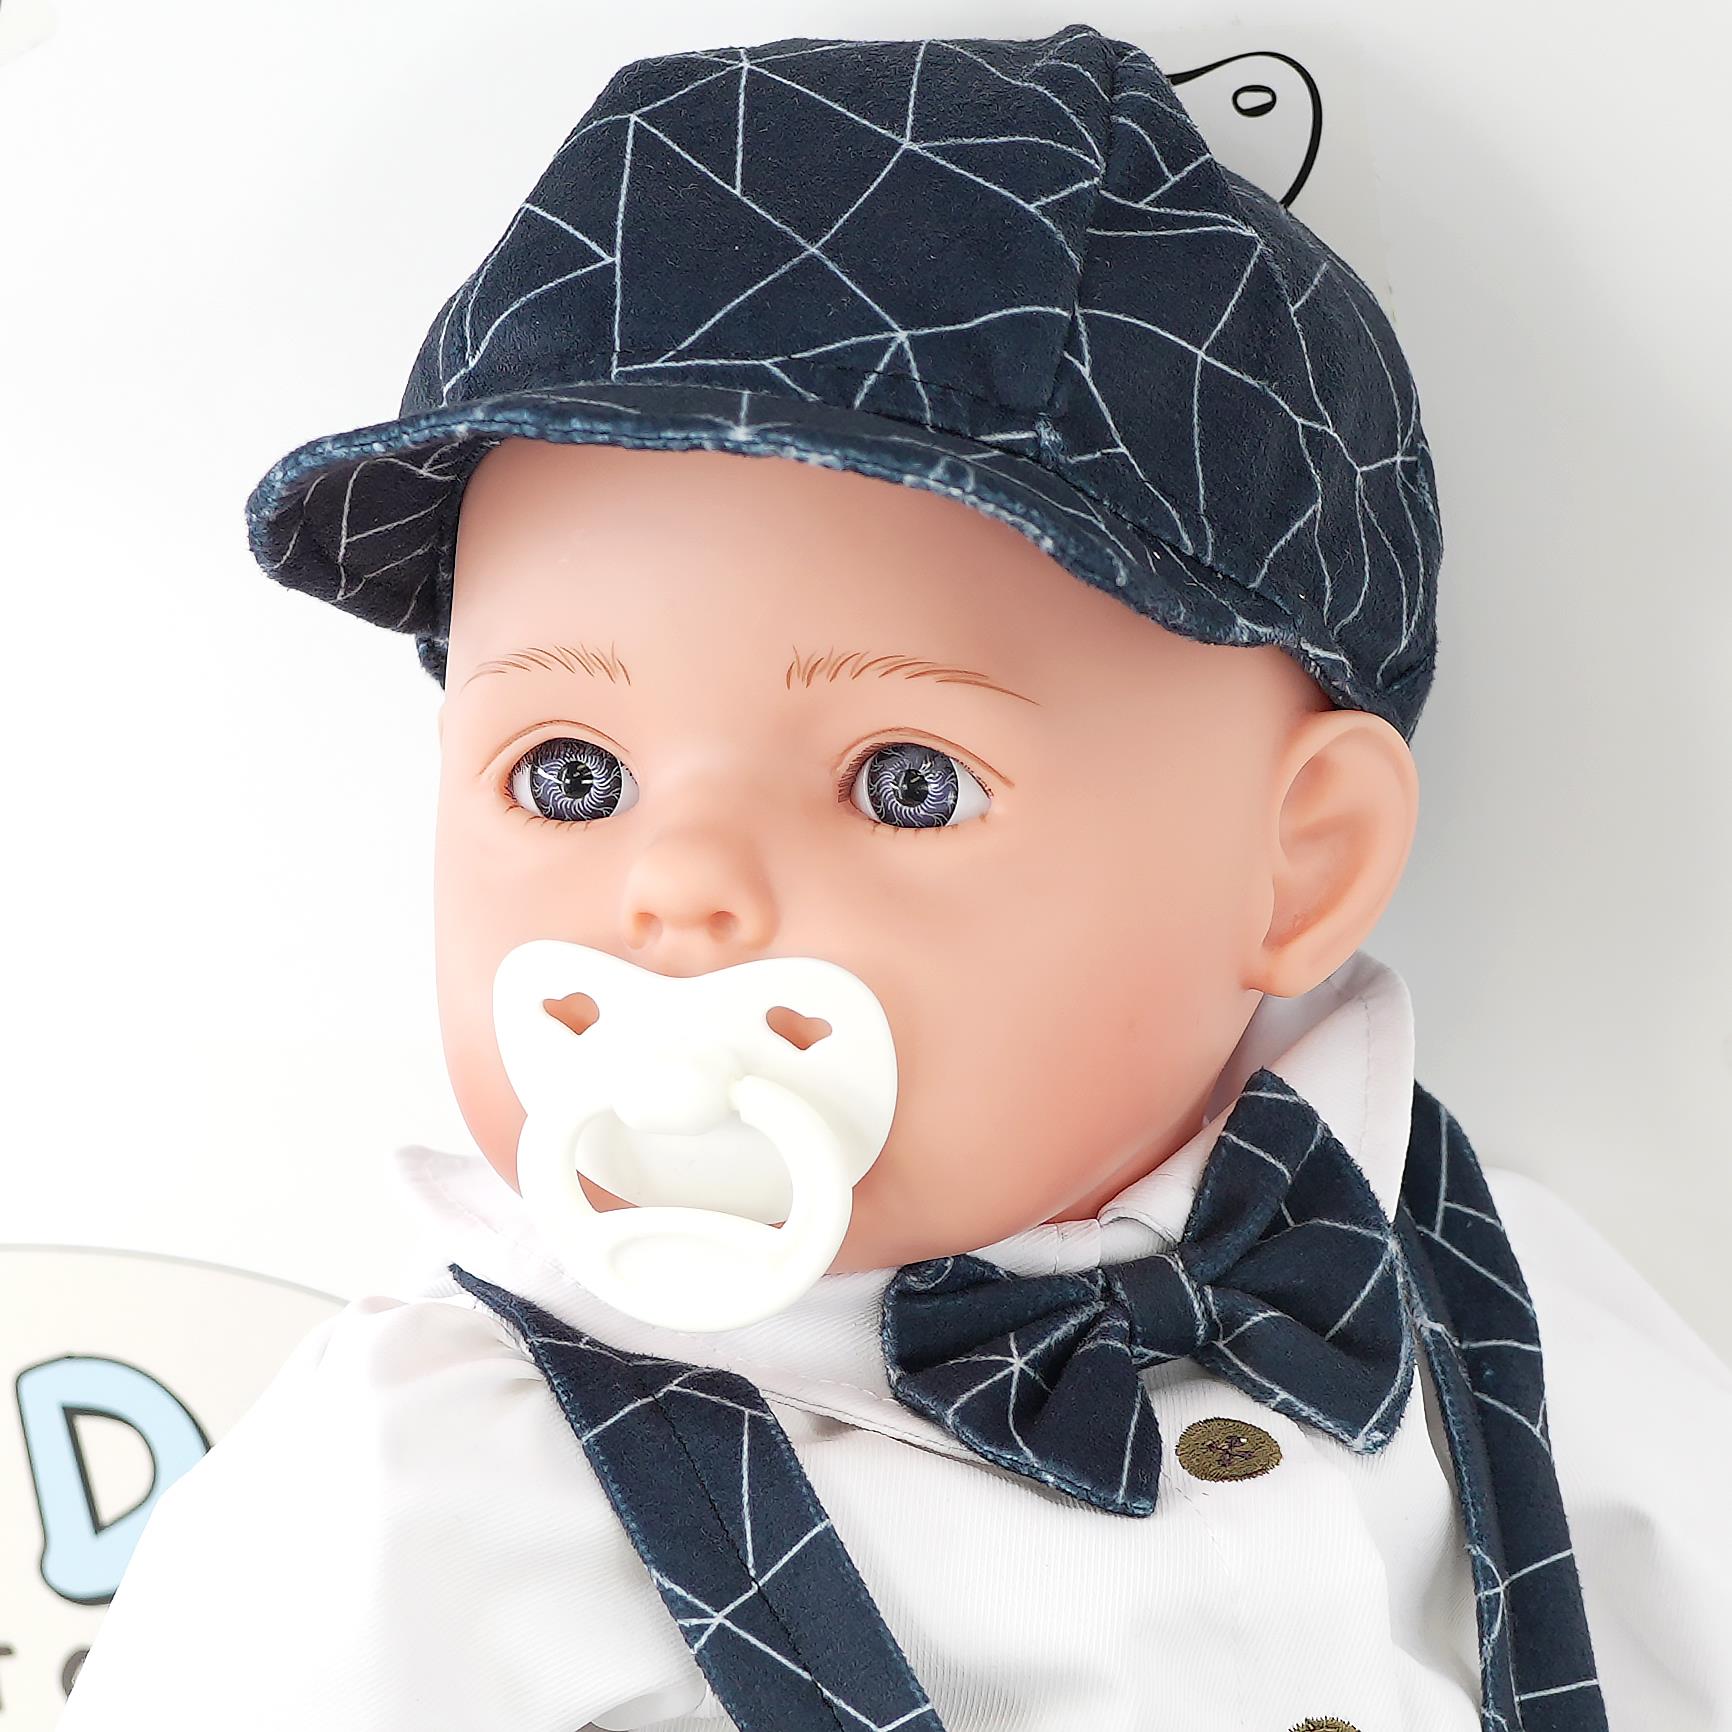 BiBi Baby Doll "Pebble" (50 cm / 20") by BiBi Doll - UKBuyZone